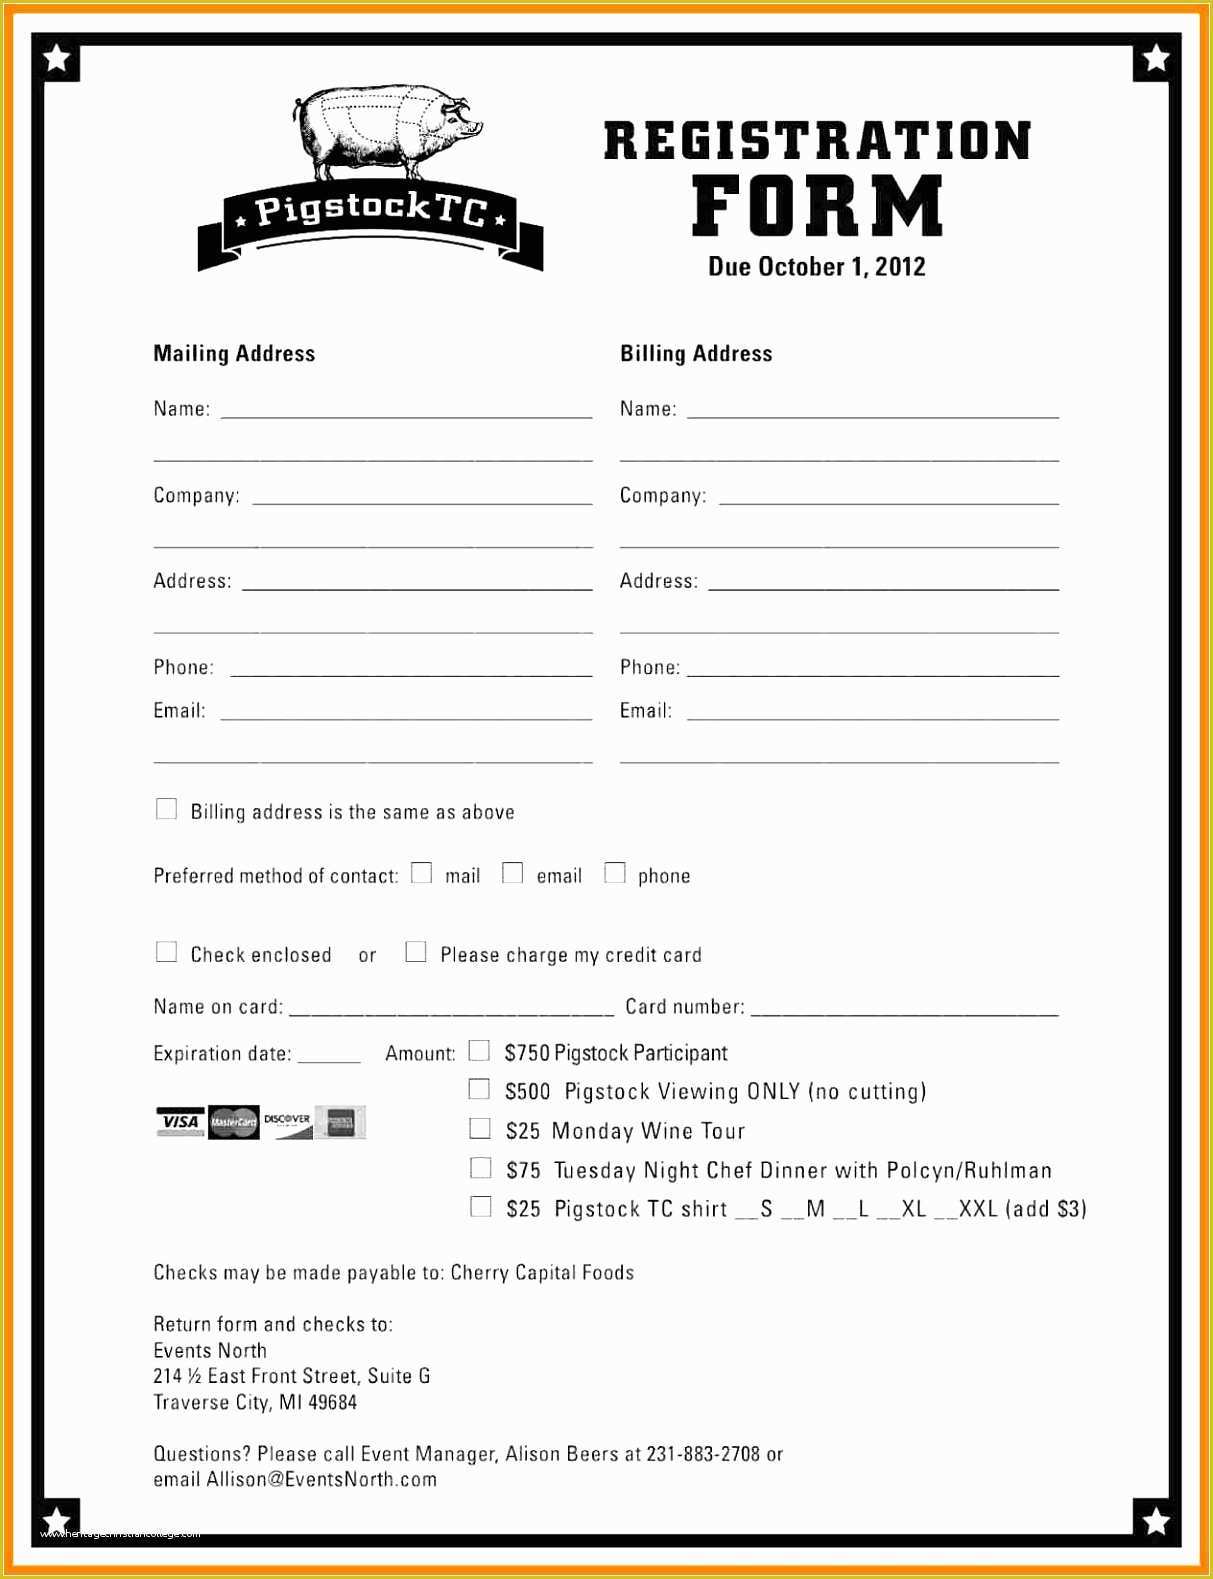 Free Golf tournament Registration form Template Of 10 Golf Registration form Template Utbio